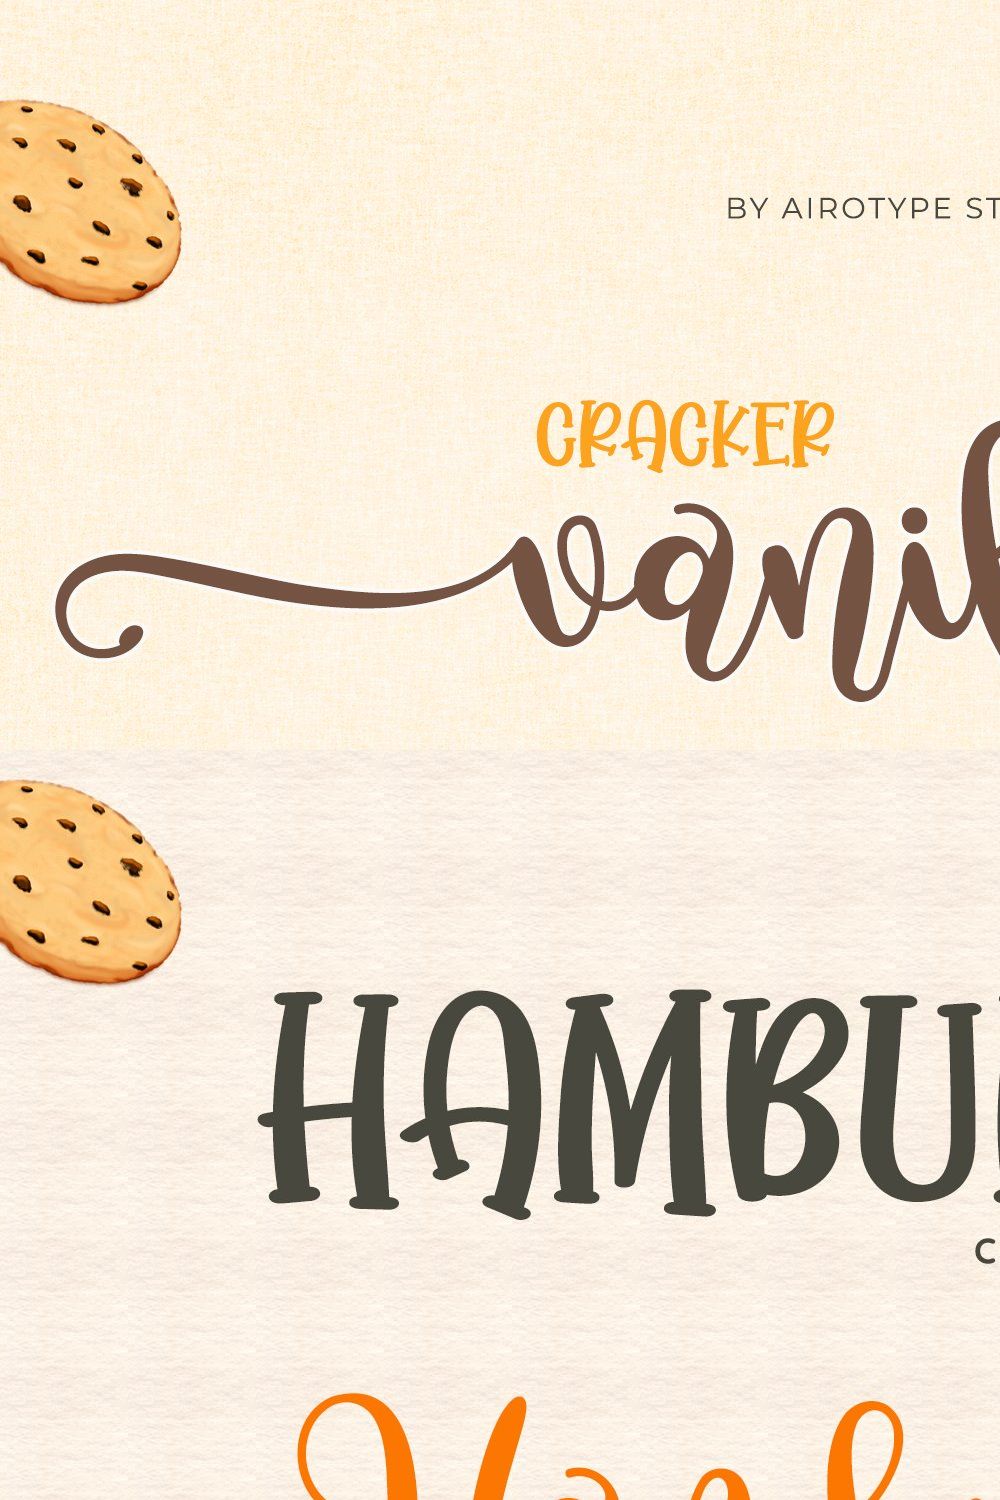 Cracker Vanilla - Cute Pretty Font pinterest preview image.